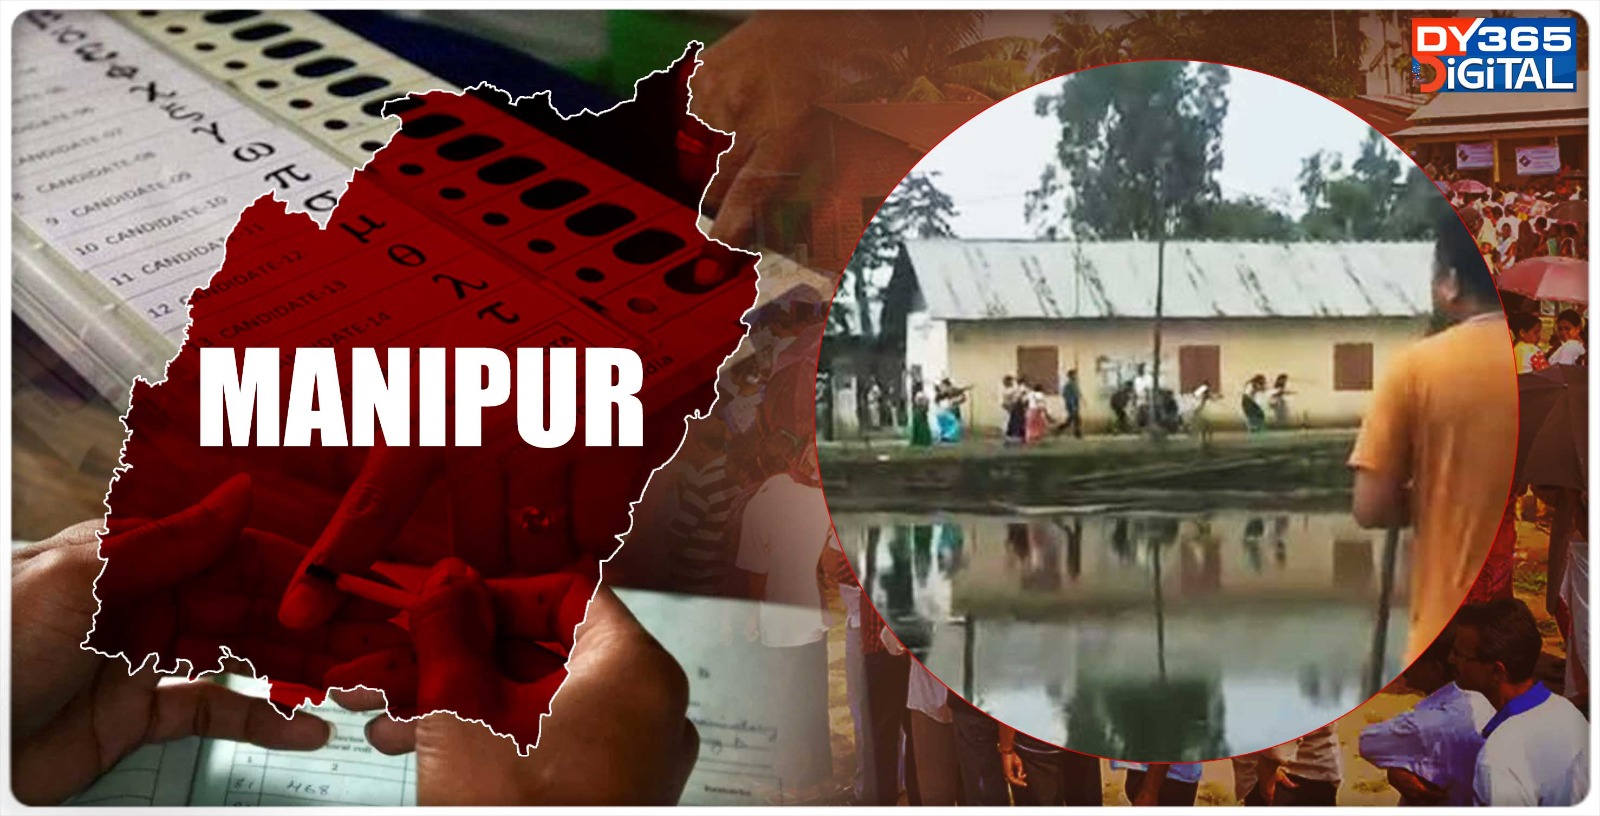 violence-erupts-during-manipur-lok-sabha-electionsensuring-voter-safety-imperat